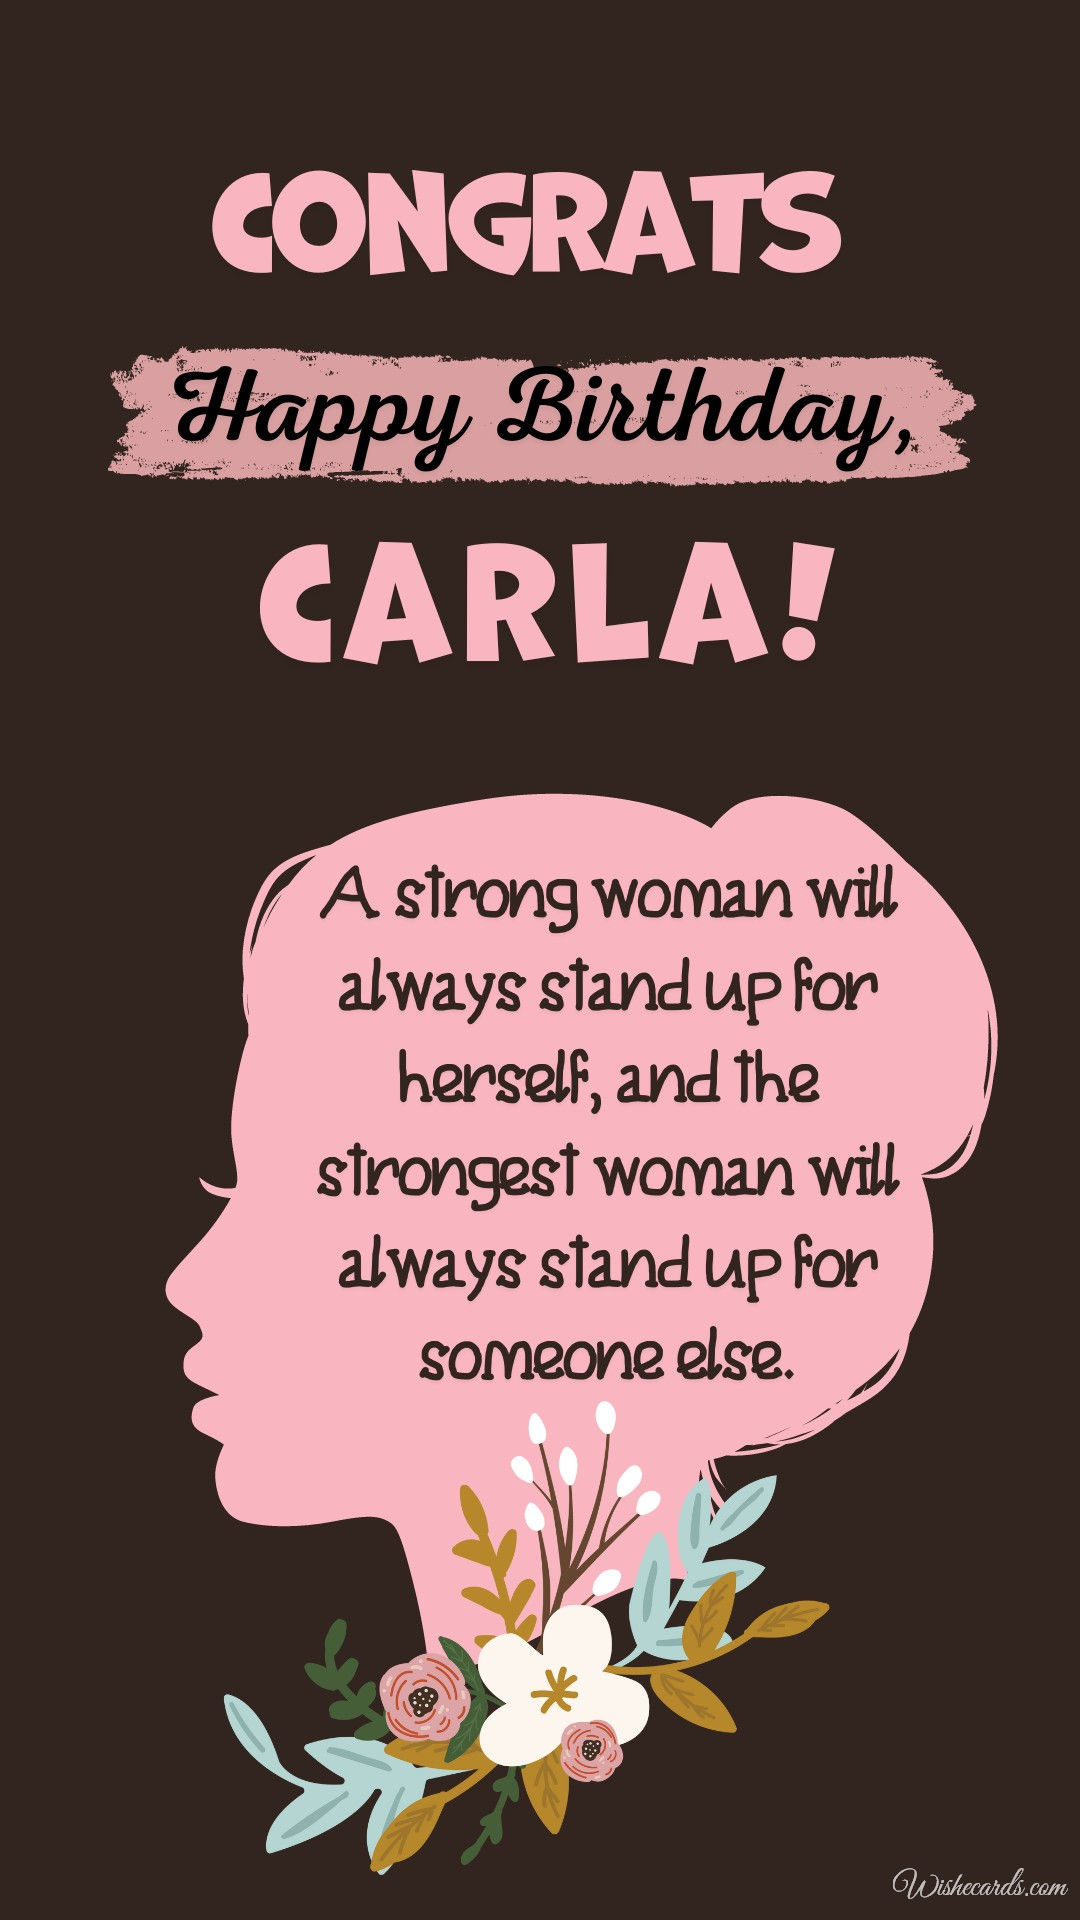 Happy Birthday to Carla